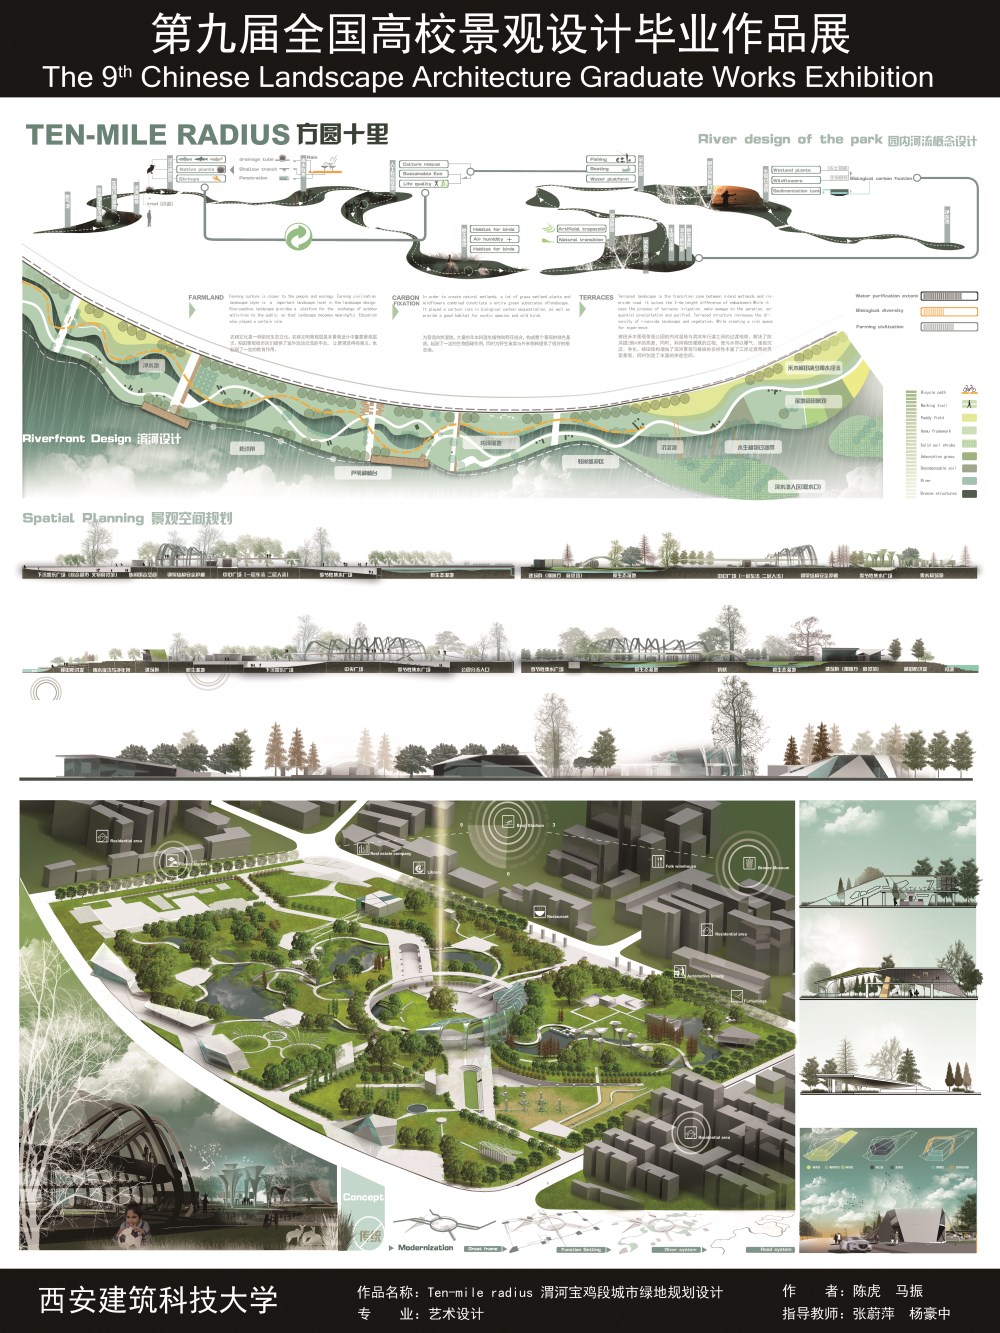 TEN-MILE RADIUS 渭河宝鸡段城市绿地规划设计-2